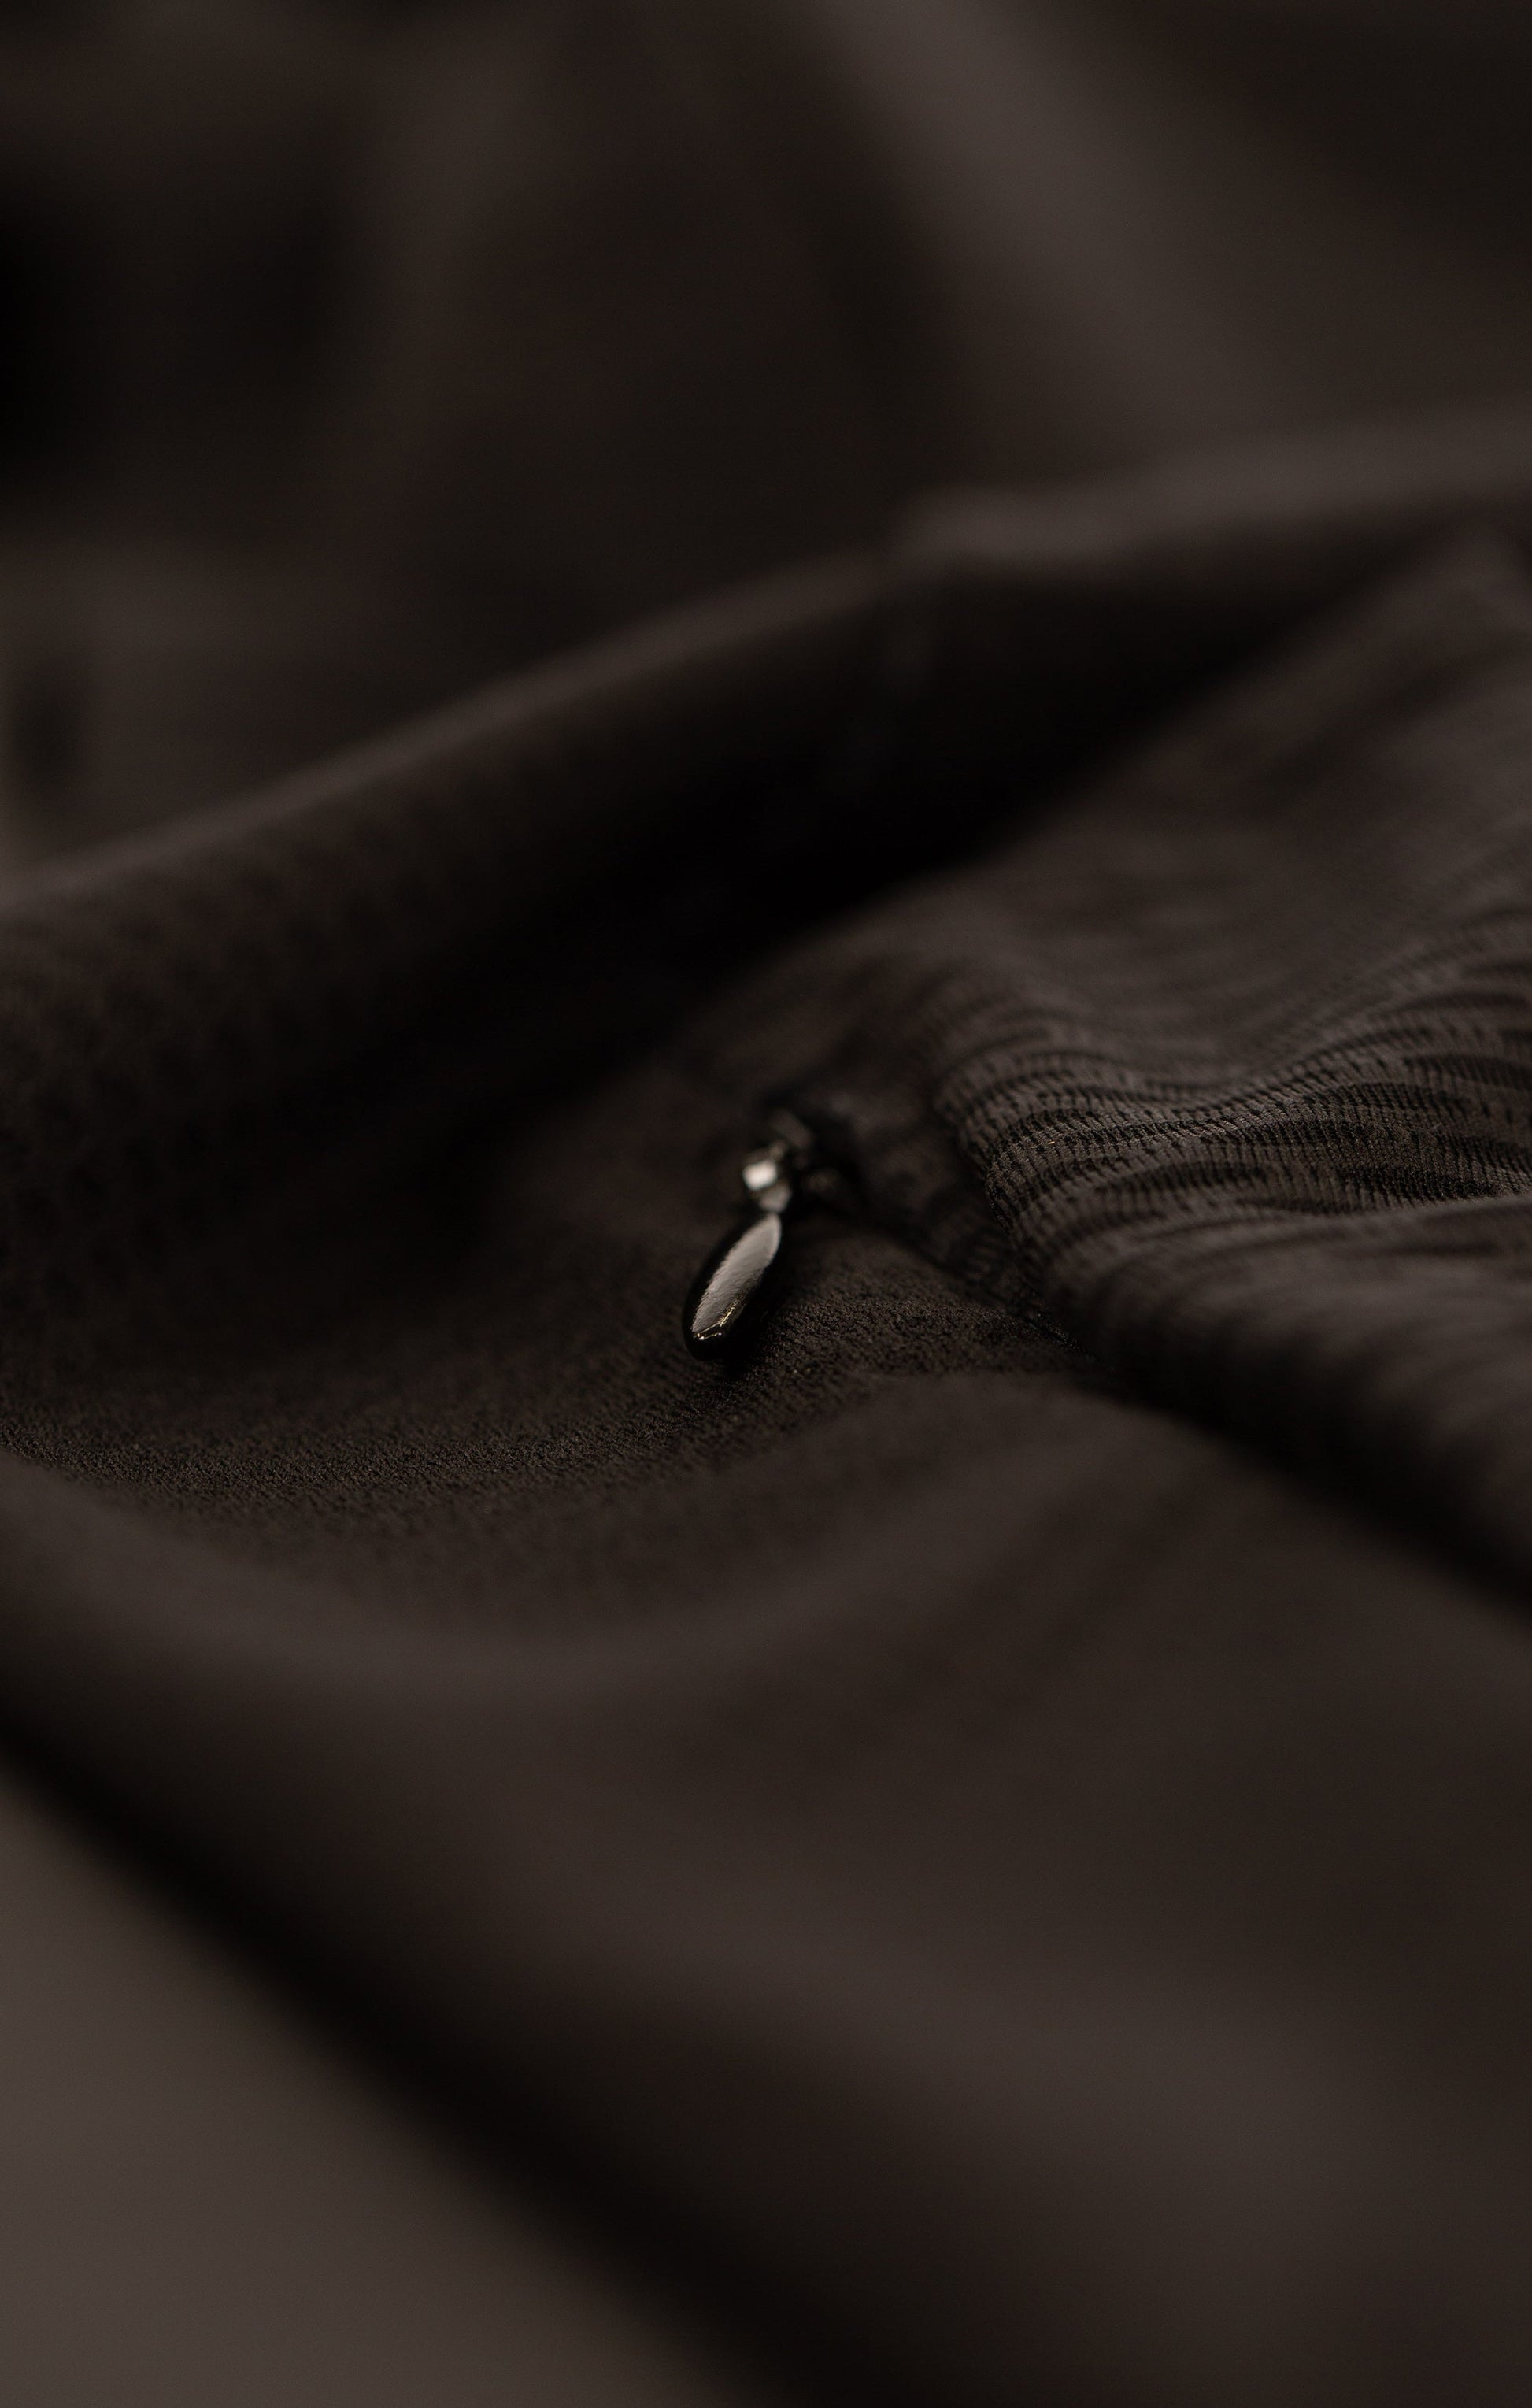 Men's Traverse Long Sleeve Jersey - Black - ilabb